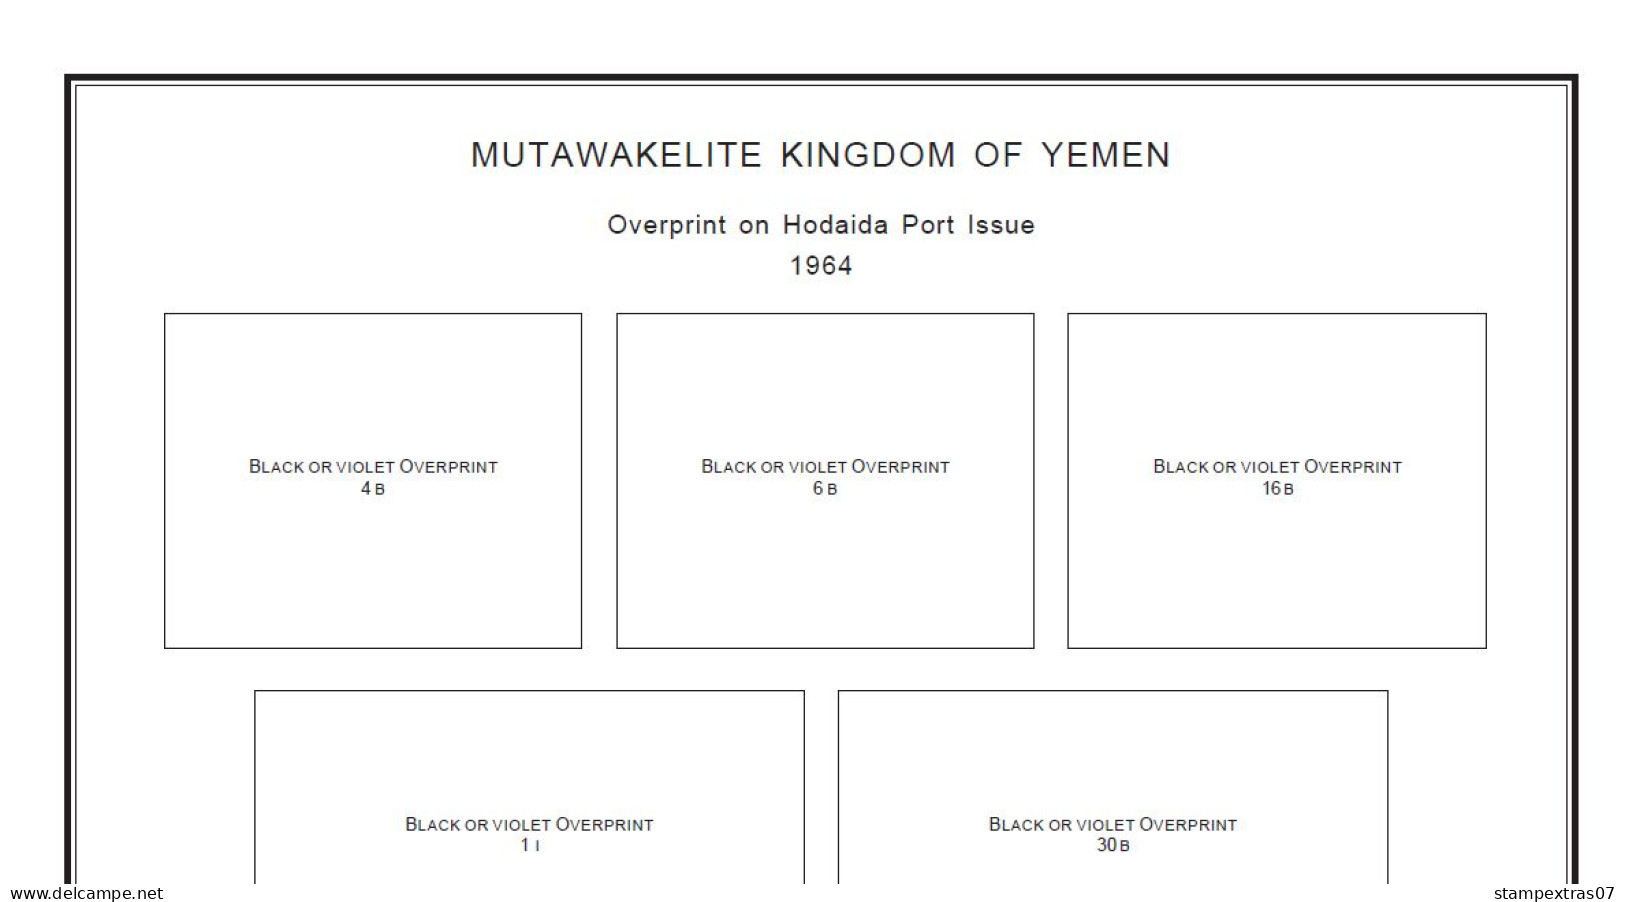 YEMEN (YEMEN ARAB REPUBLIC) STAMP ALBUM PAGES 1926-2010 (376 pages)